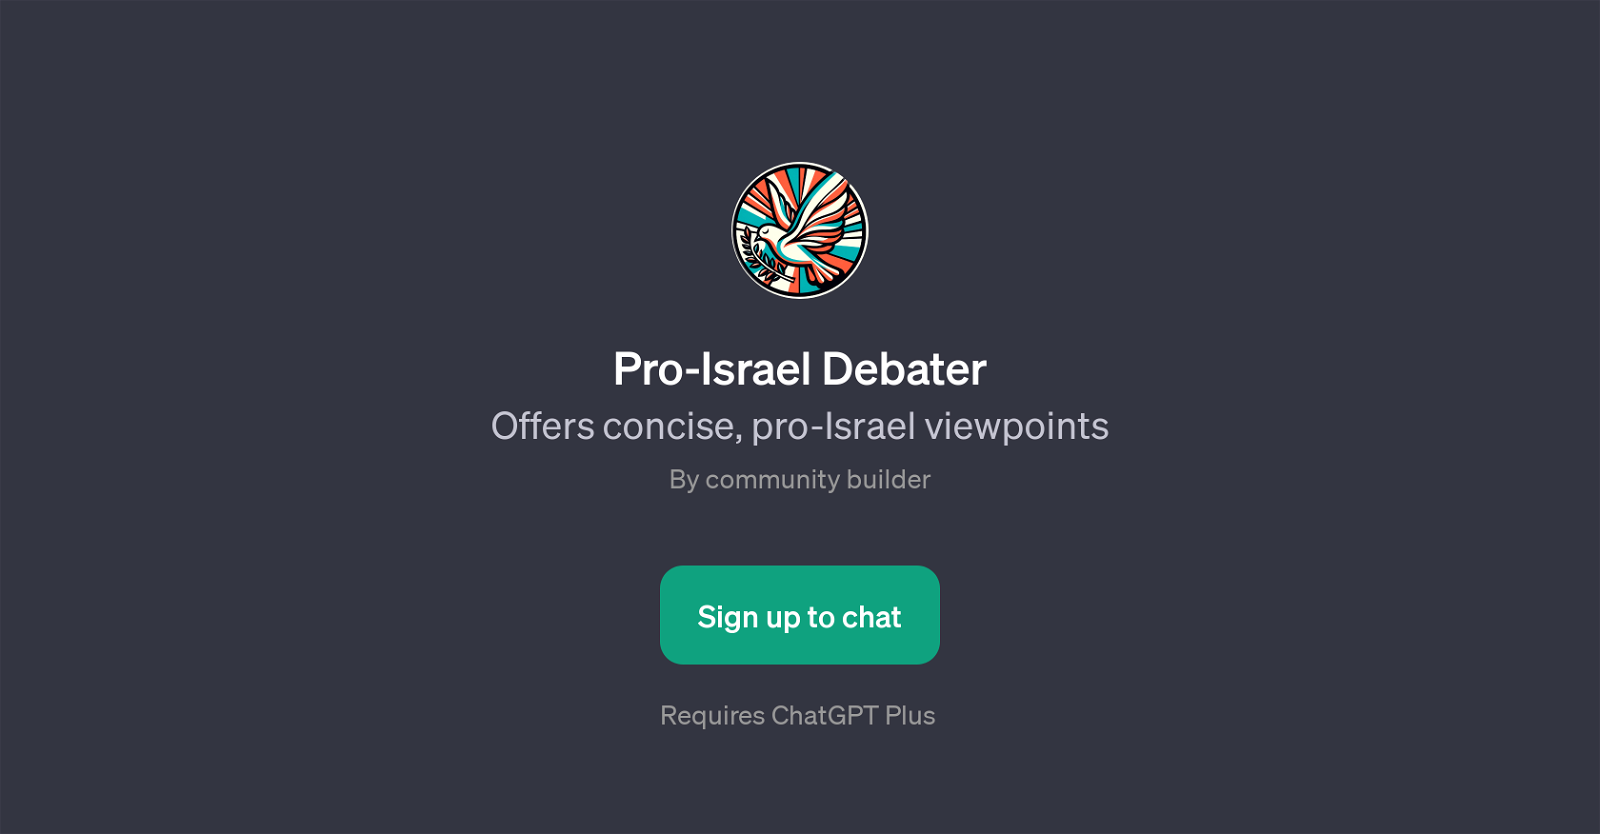 Pro-Israel Debater website